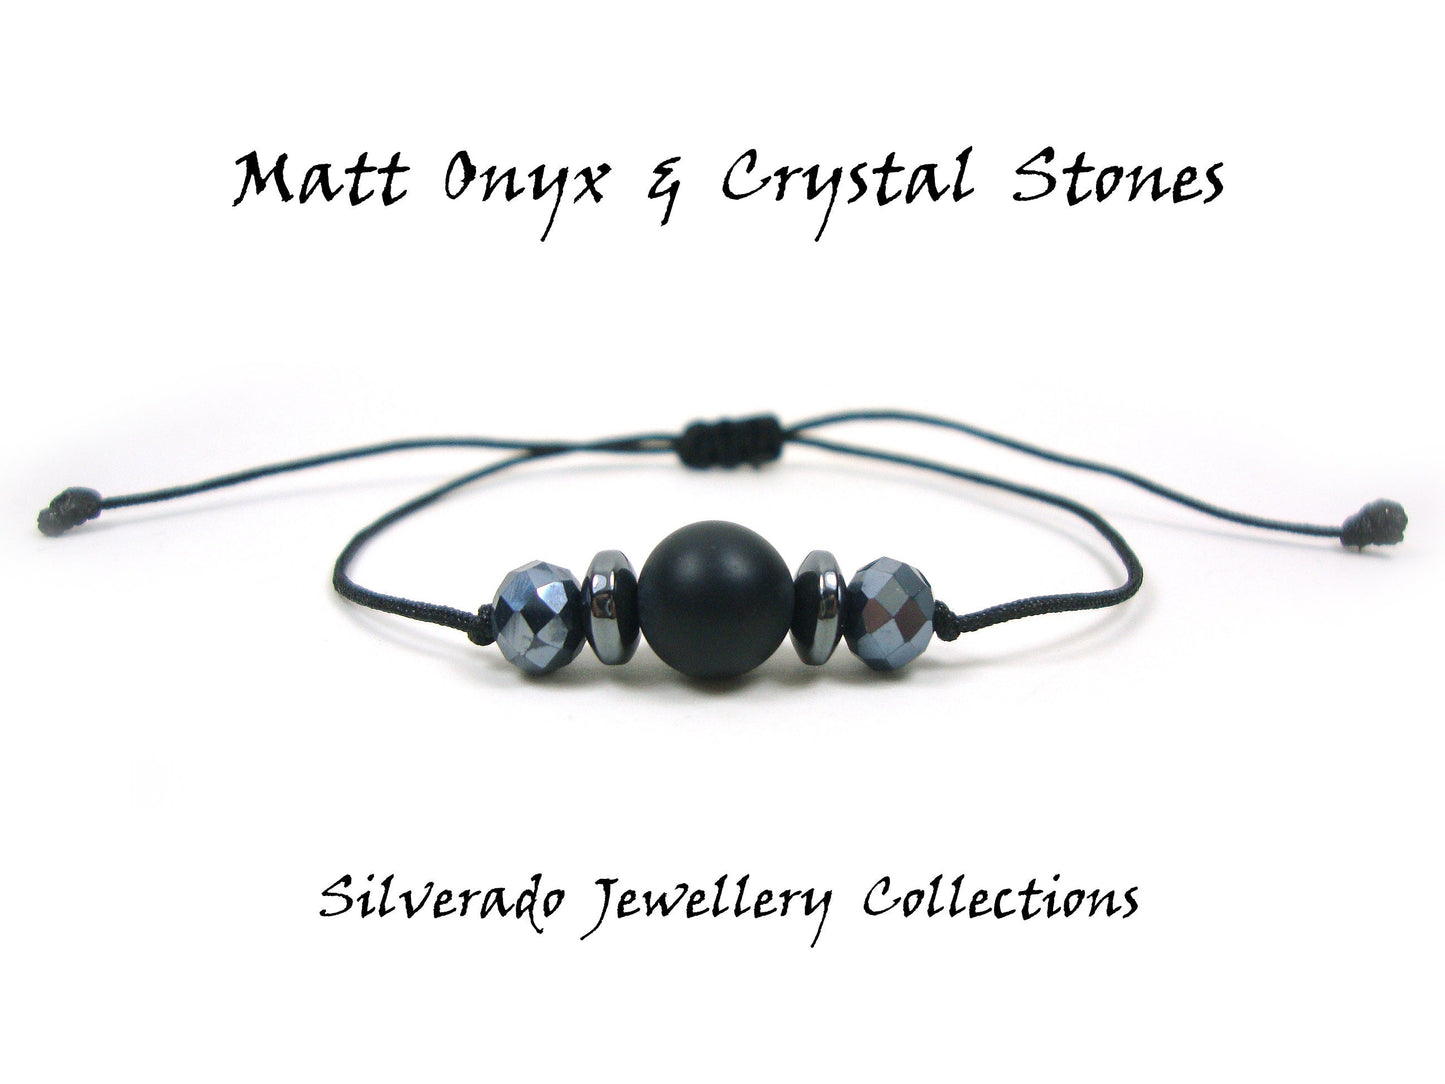 Matt Black Onyx & Crystal Stones Cord Adjustable Bracelet, Modern Trendy Minimalist Friendship Casual Greek Bracelet, Gift For Him Her, Onyx